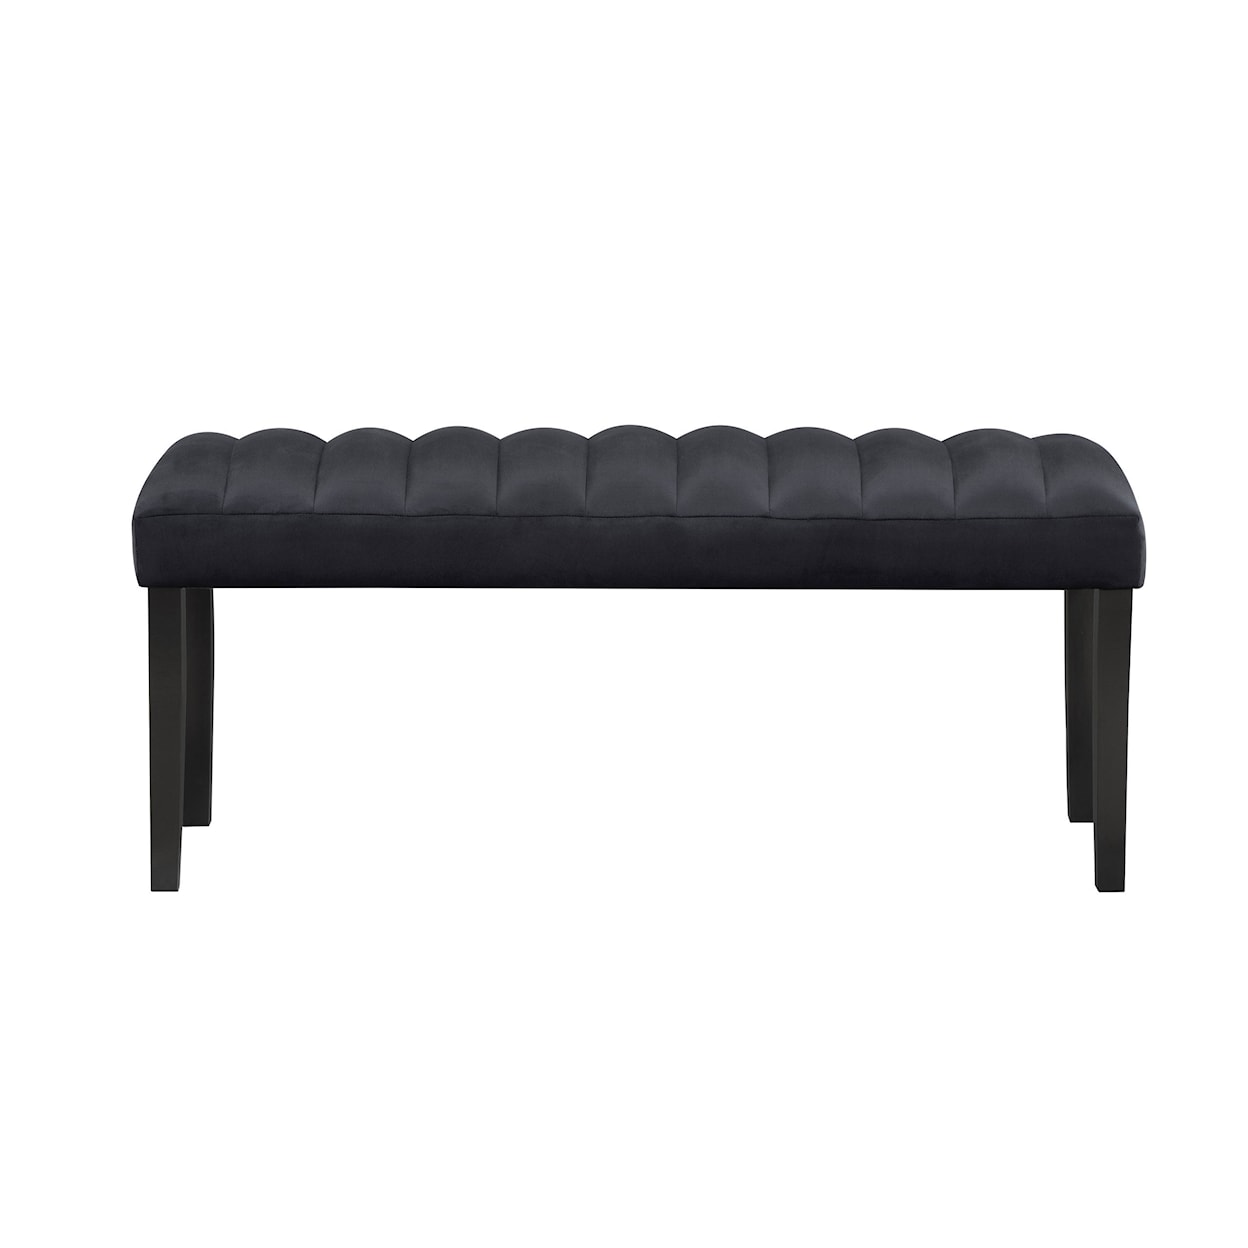 Global Furniture D8685 Bench Bench